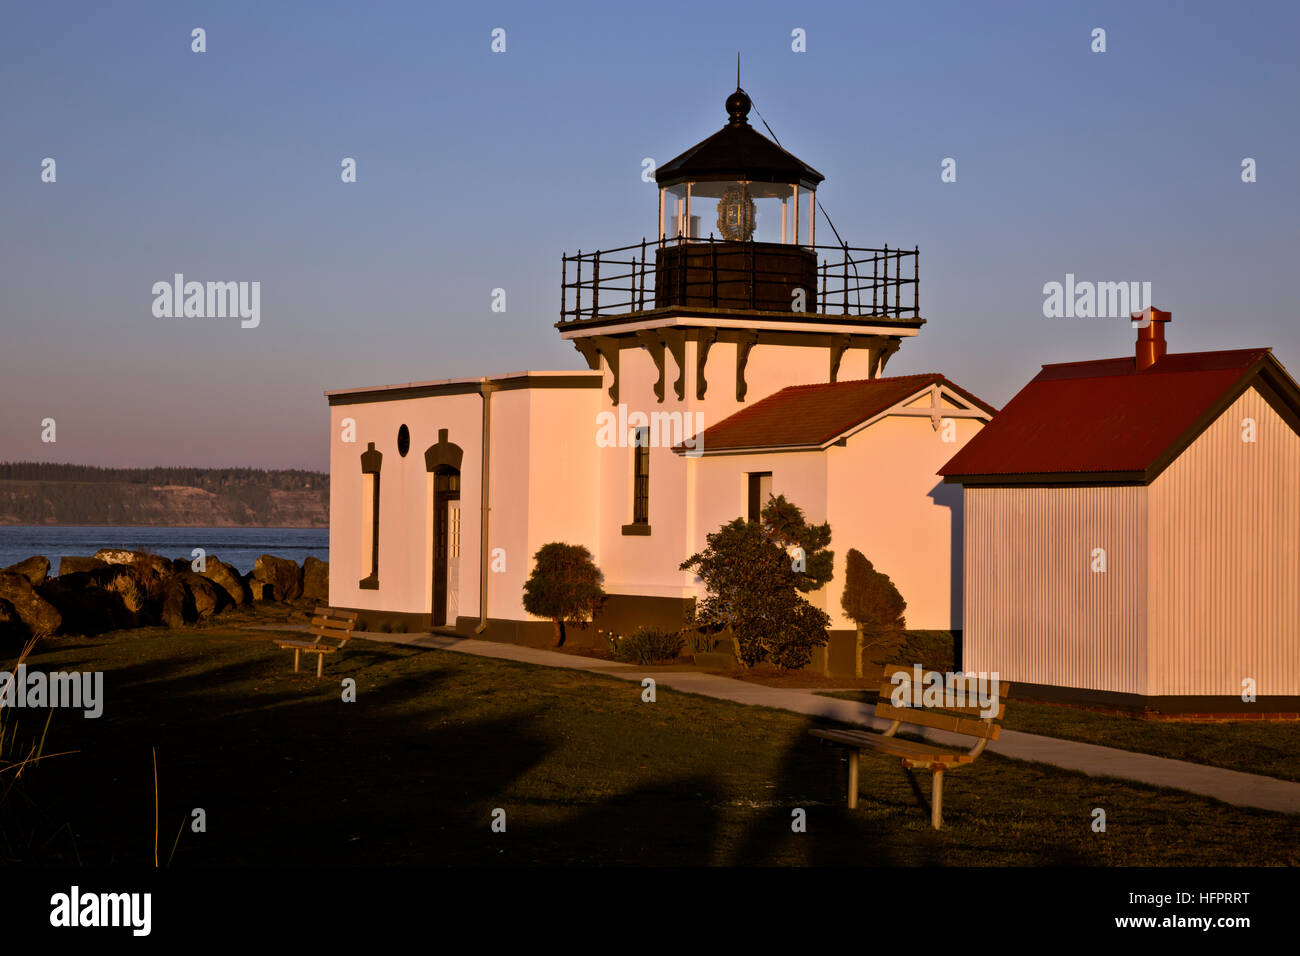 WA13042-00...WASHINGTON - Sunset at Point No Point Lighthouse on the Puget Sound. Stock Photo